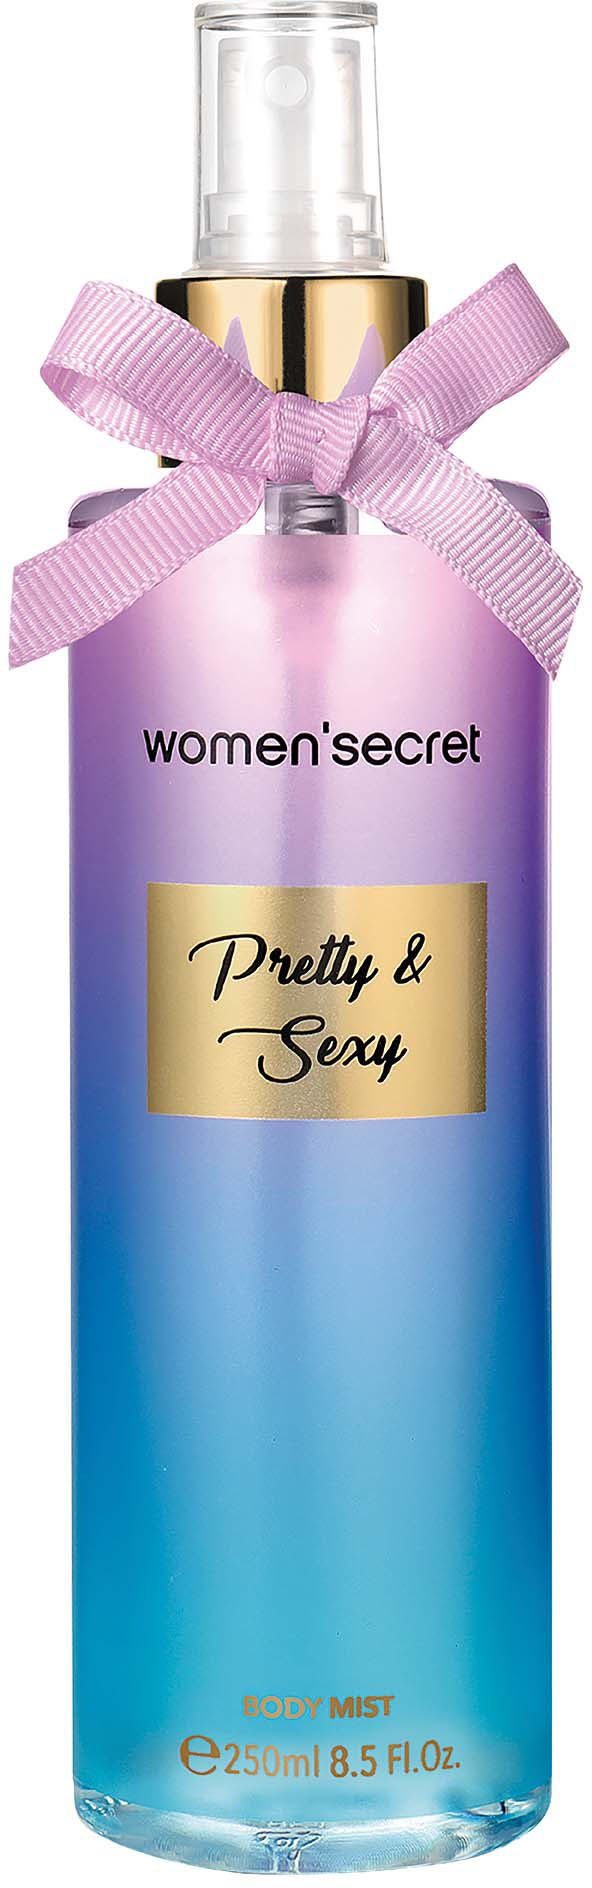 Pretty Sexy - & Mist women'secret Körperspray Body